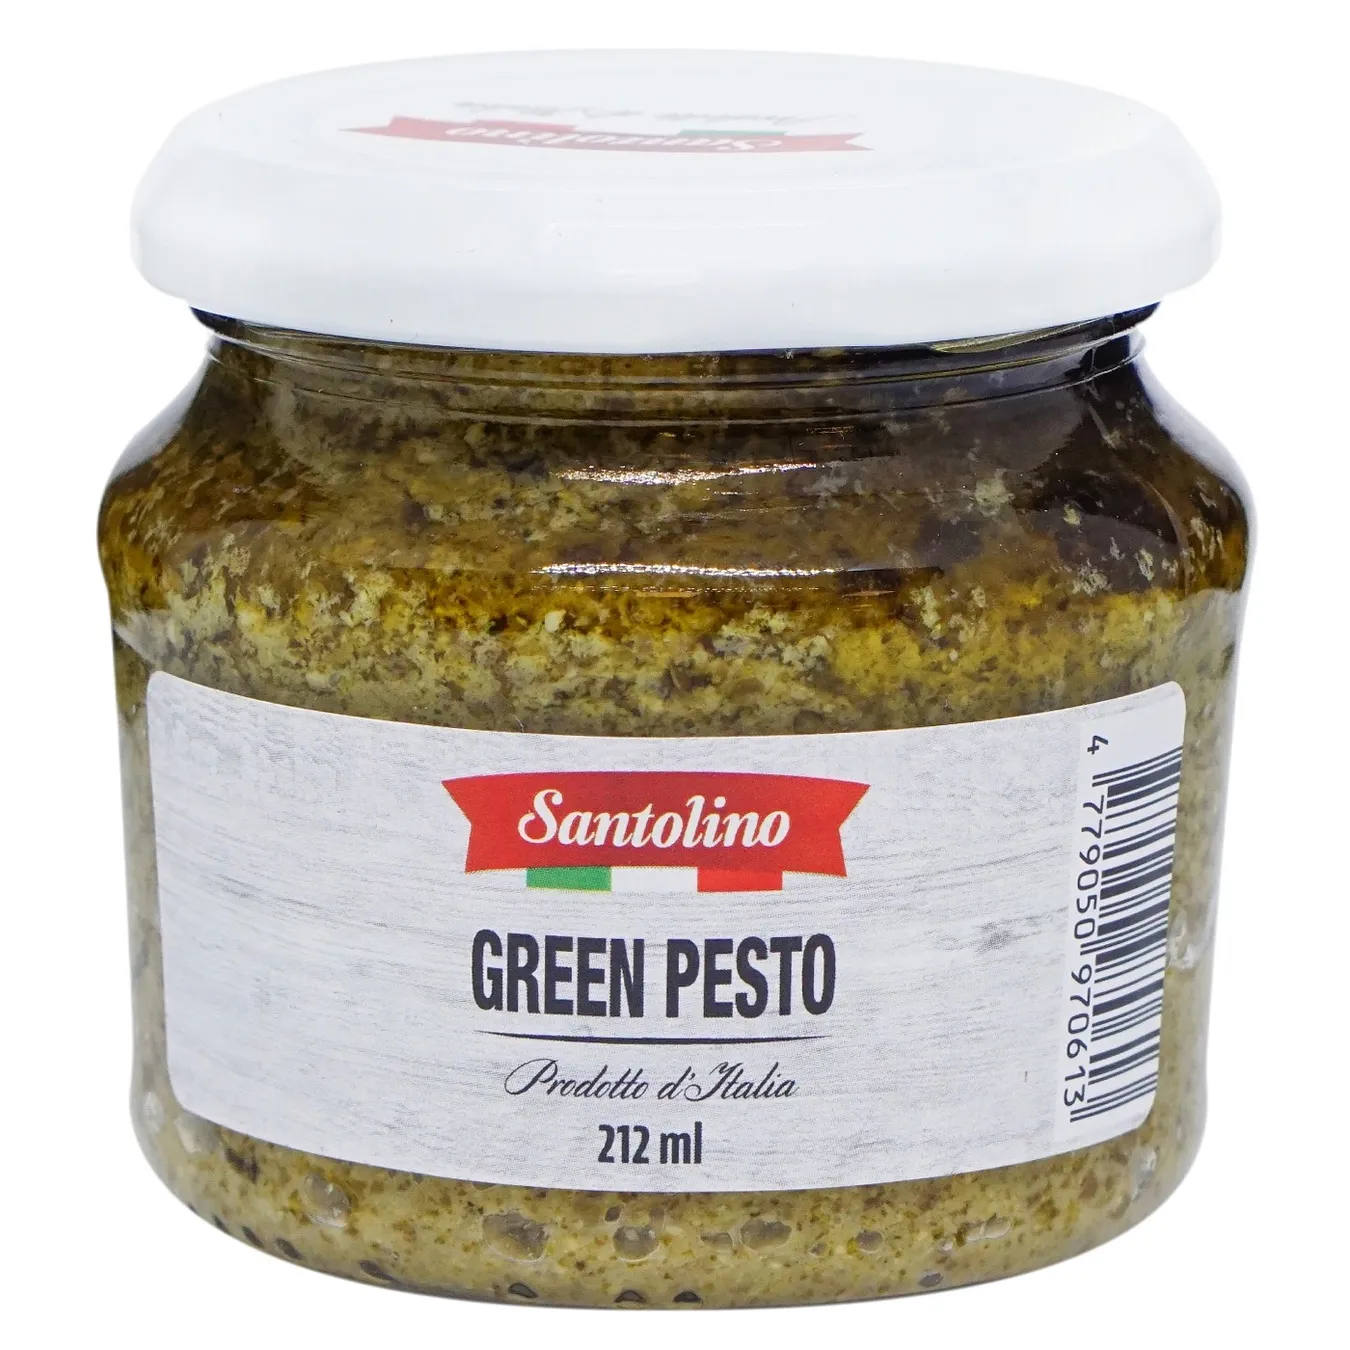 Santolino Pesto green pasteurized sauce 190g